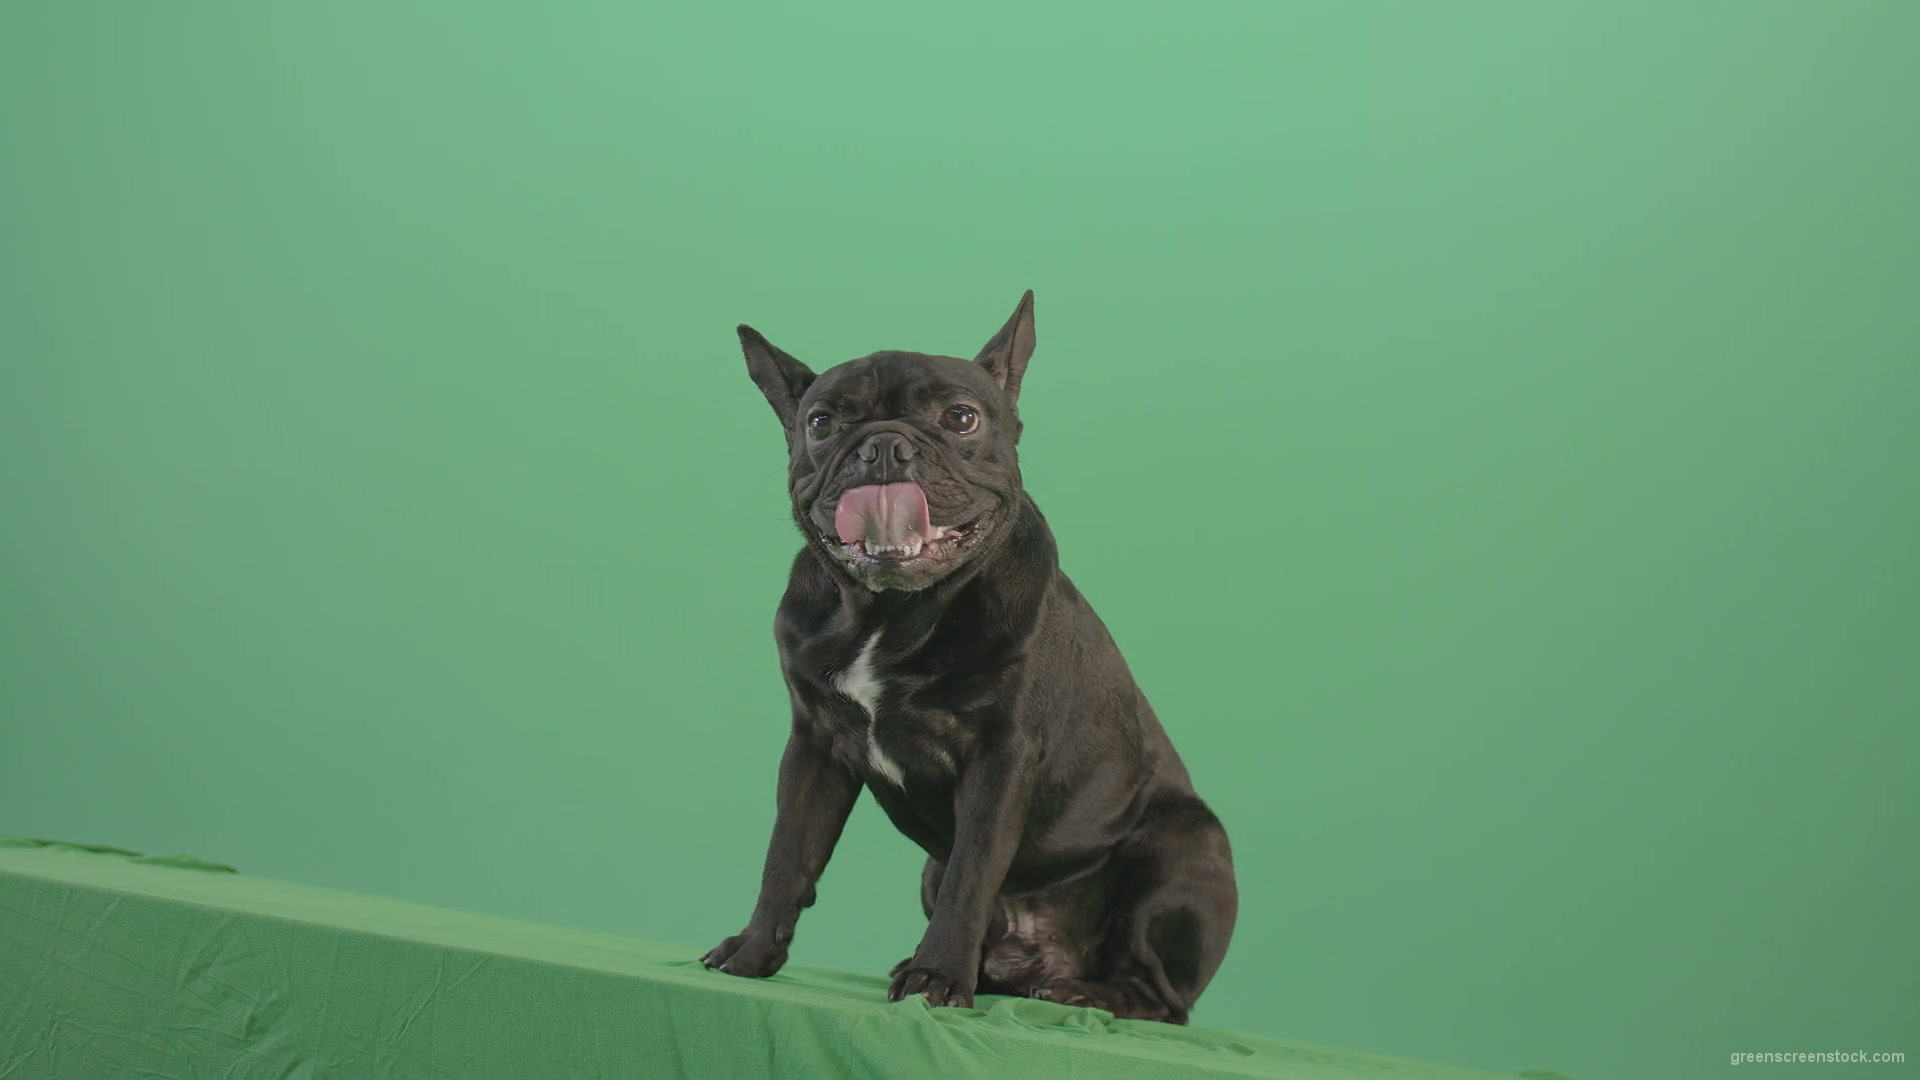 Lazy-french-bulldog-animal-dog-posing-on-green-screen-4K-Video-Footage-1920_007 Green Screen Stock